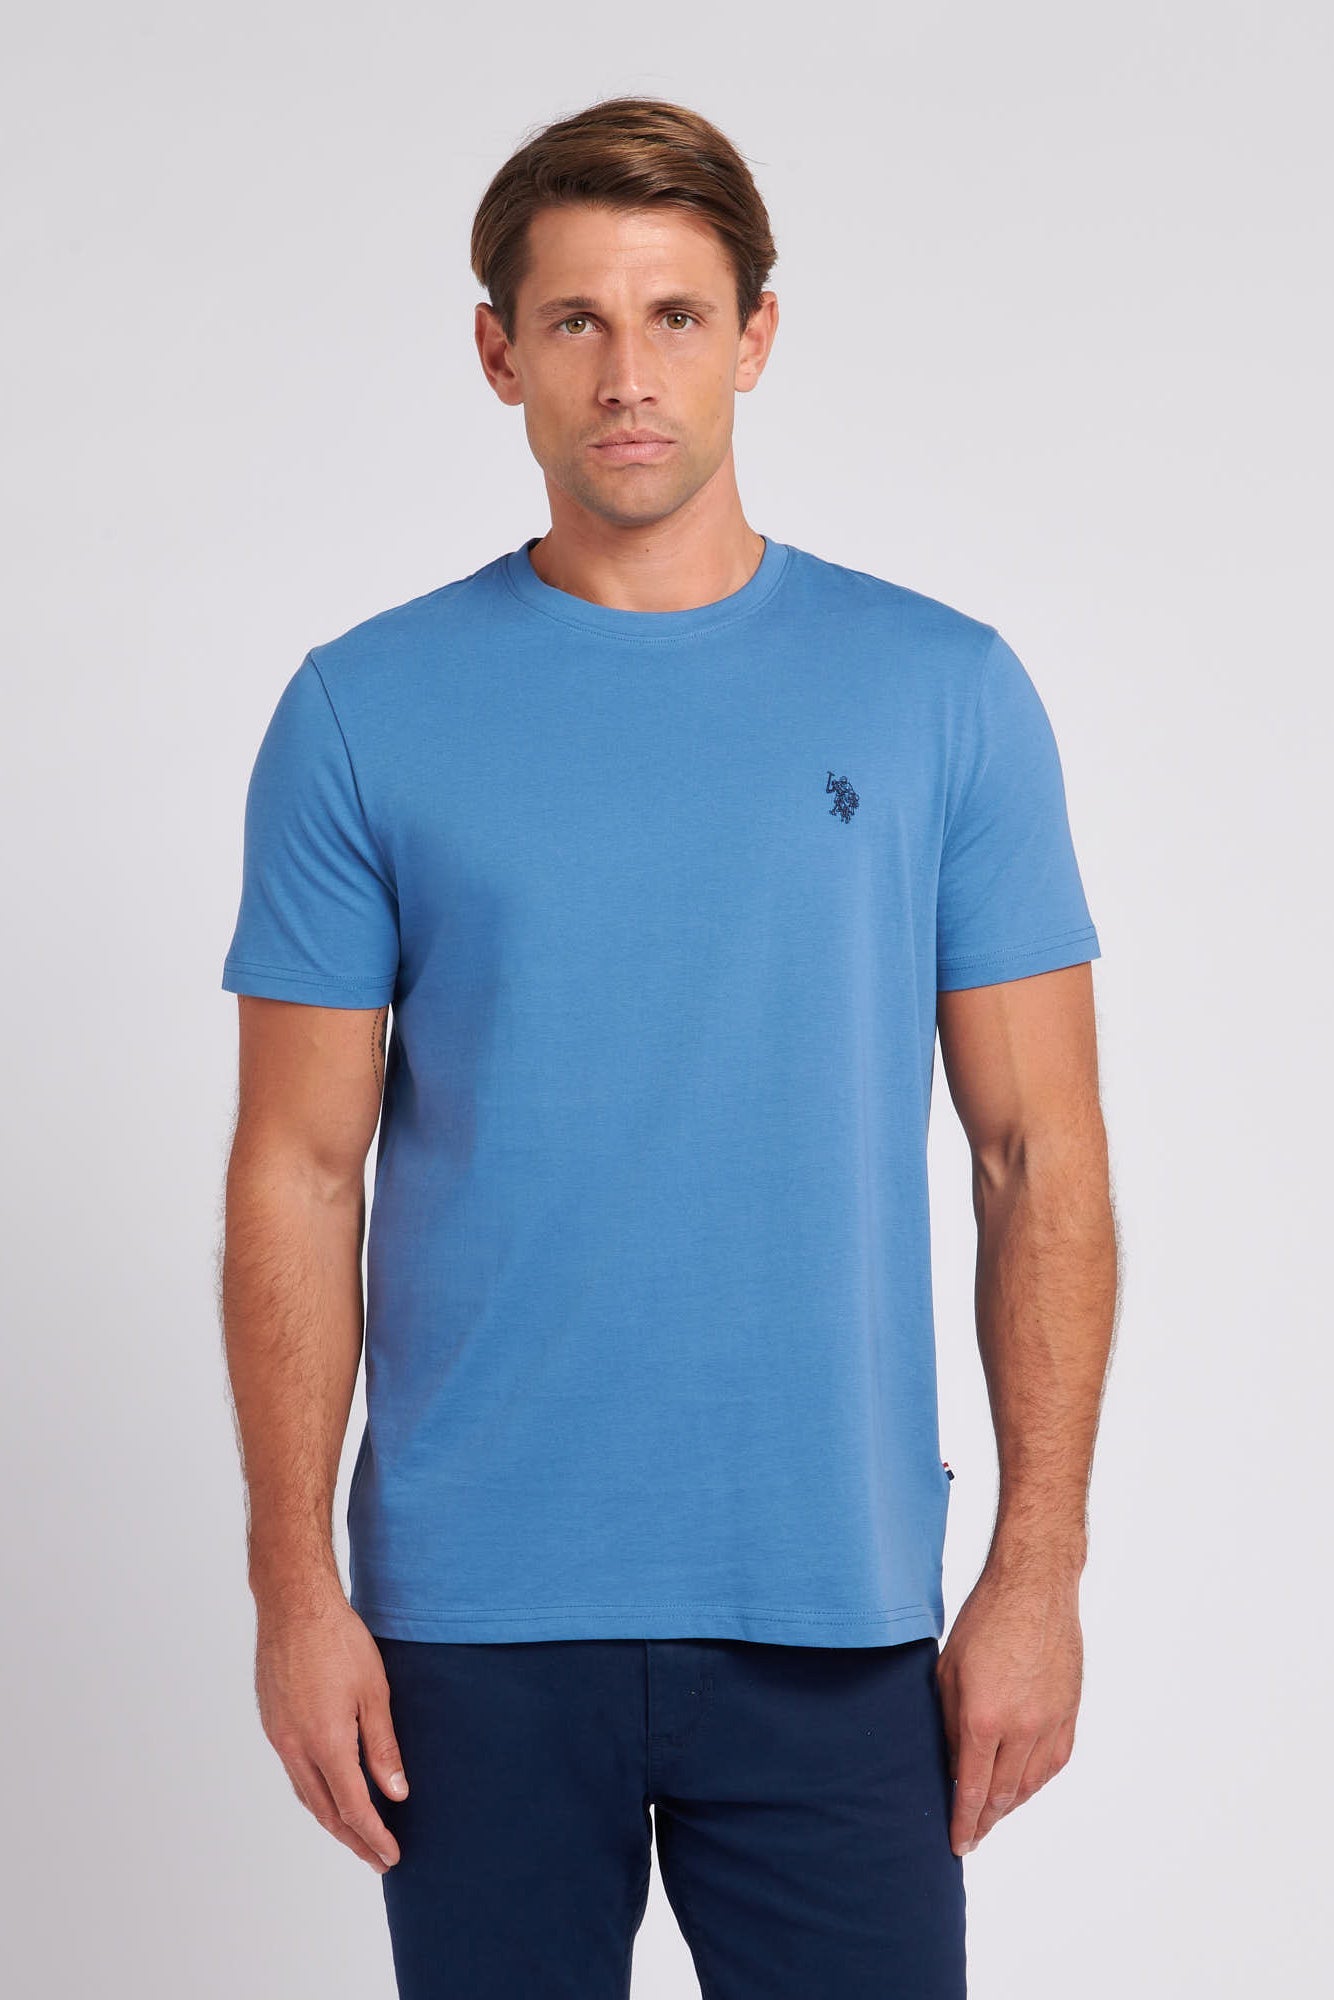 U.S. Polo Assn. Mens Double Horsemen T-Shirt in Blue Horizon